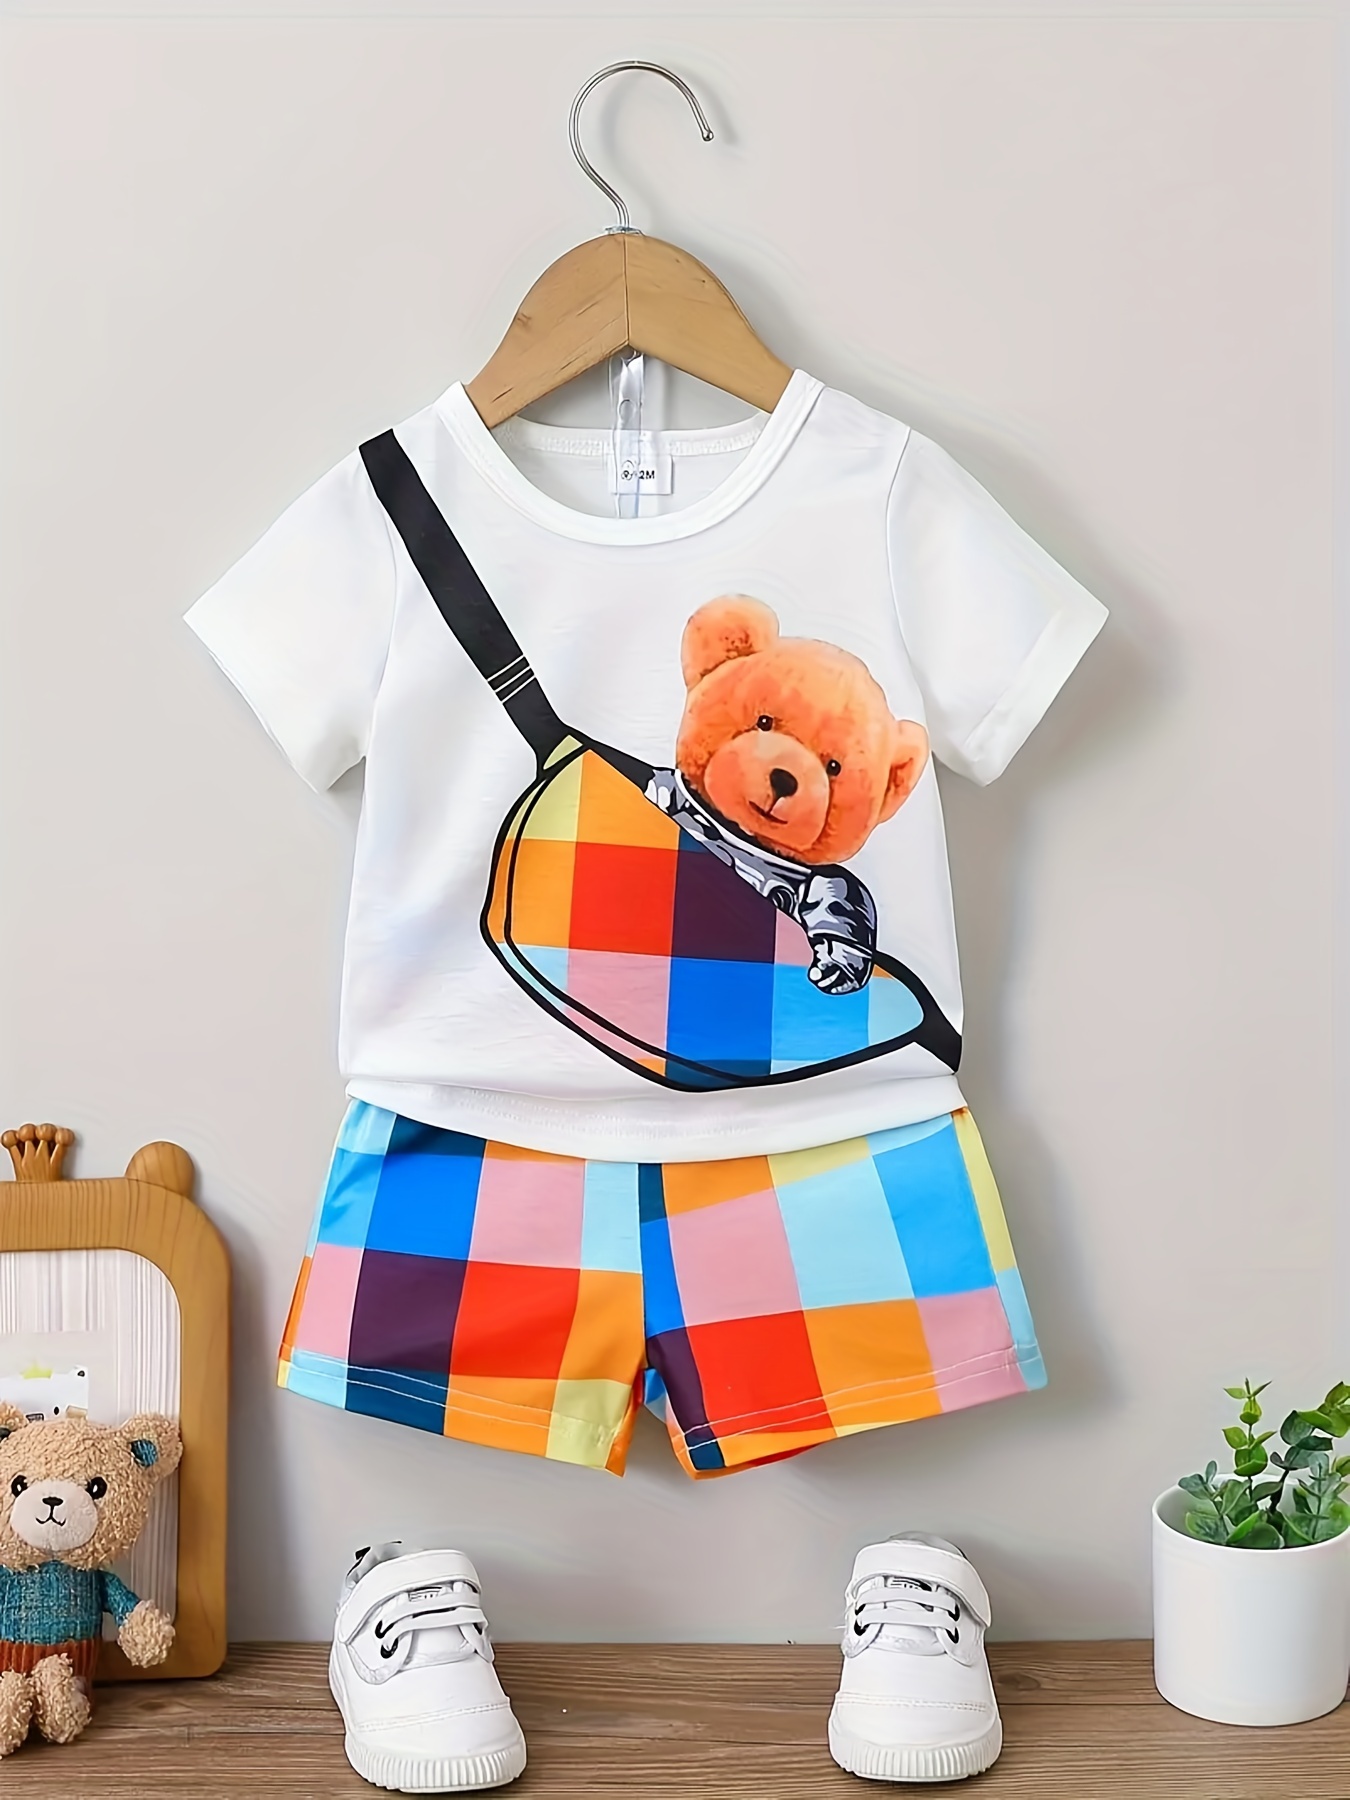 Guozyun Baby Boy's Toddlers T-Shirt Cotton Tops Tees Short Sleeve